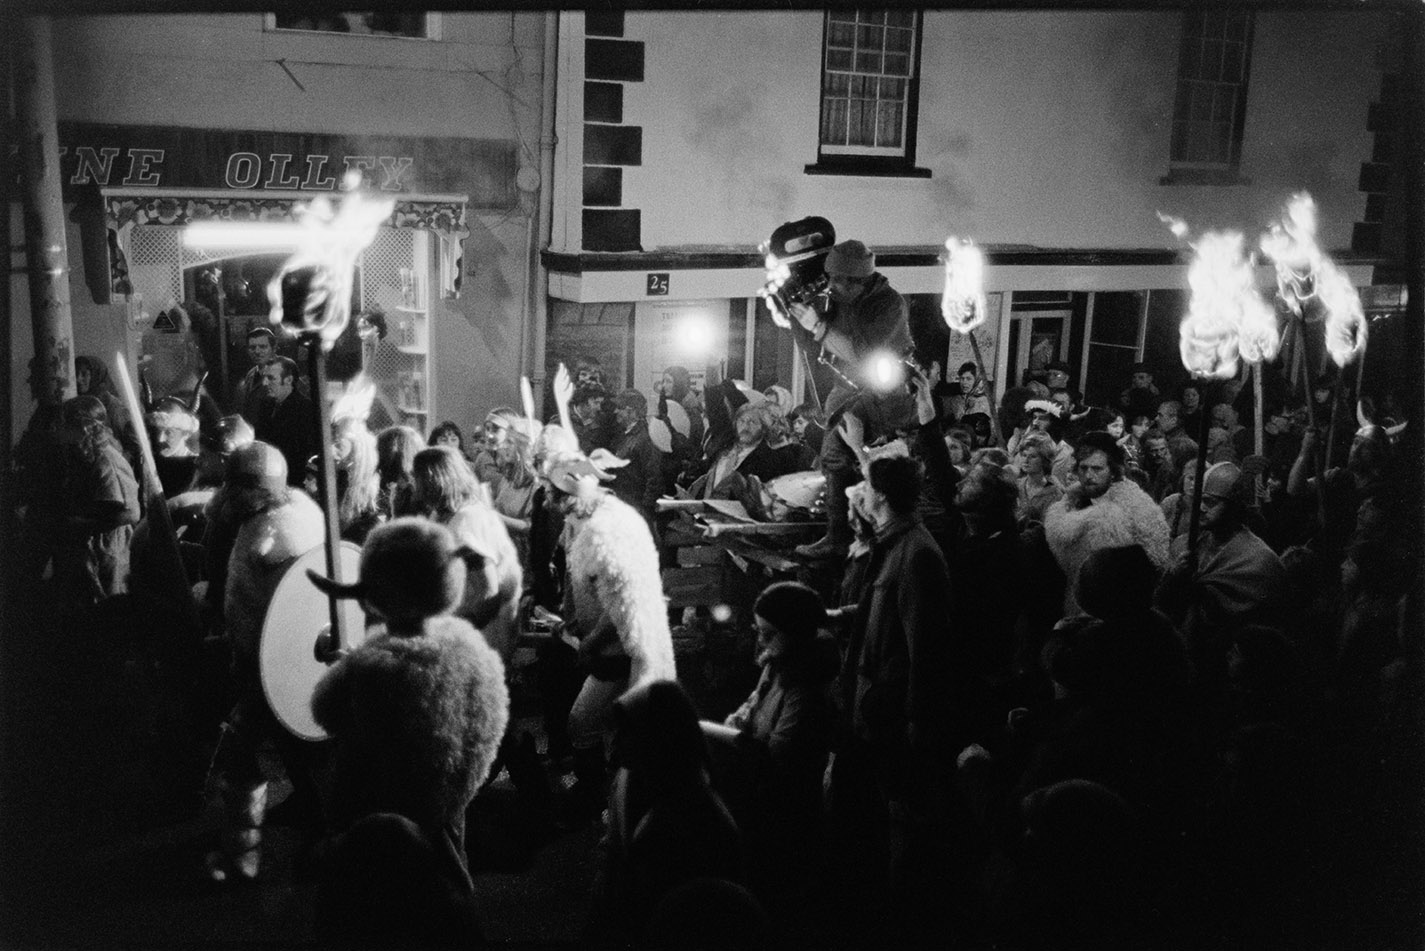 Cameraman held aloft - filming events, Torrington Fair, 2 November 1974